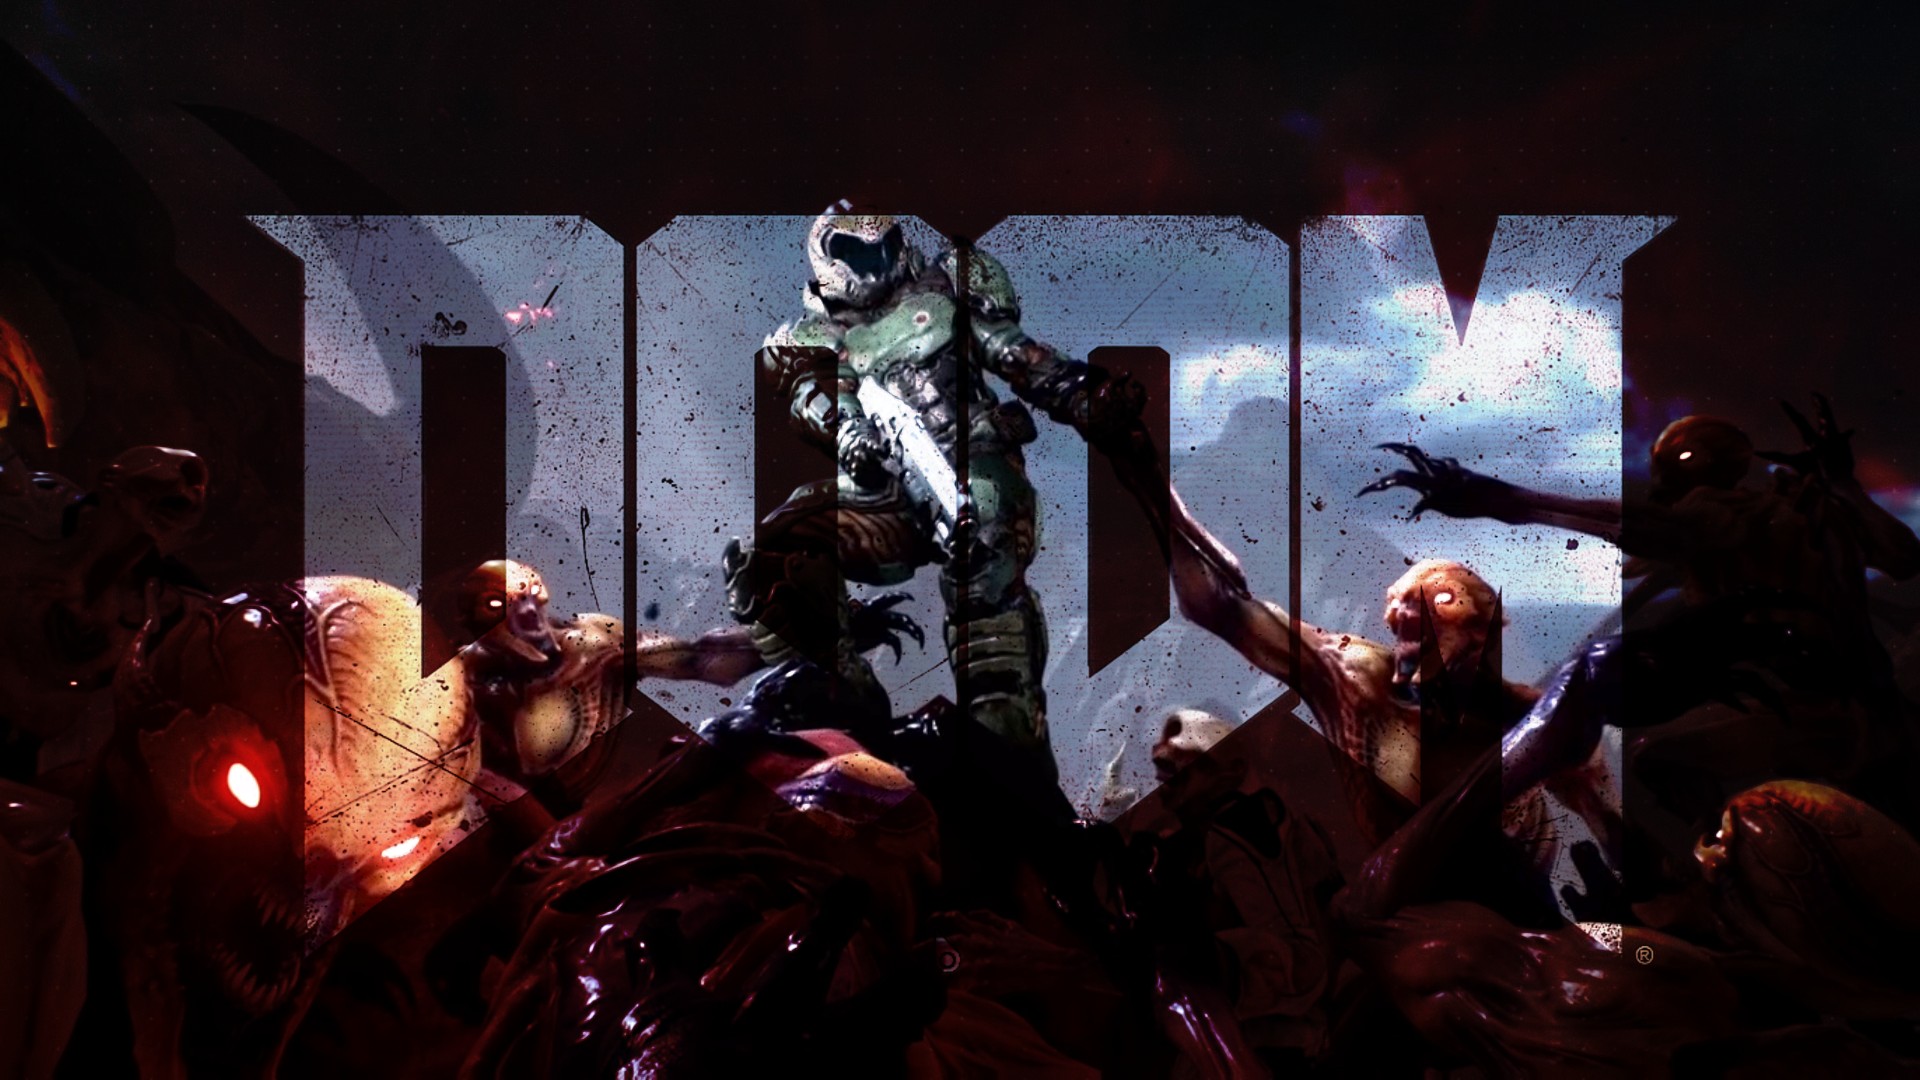 doom 1 full game download windows 10